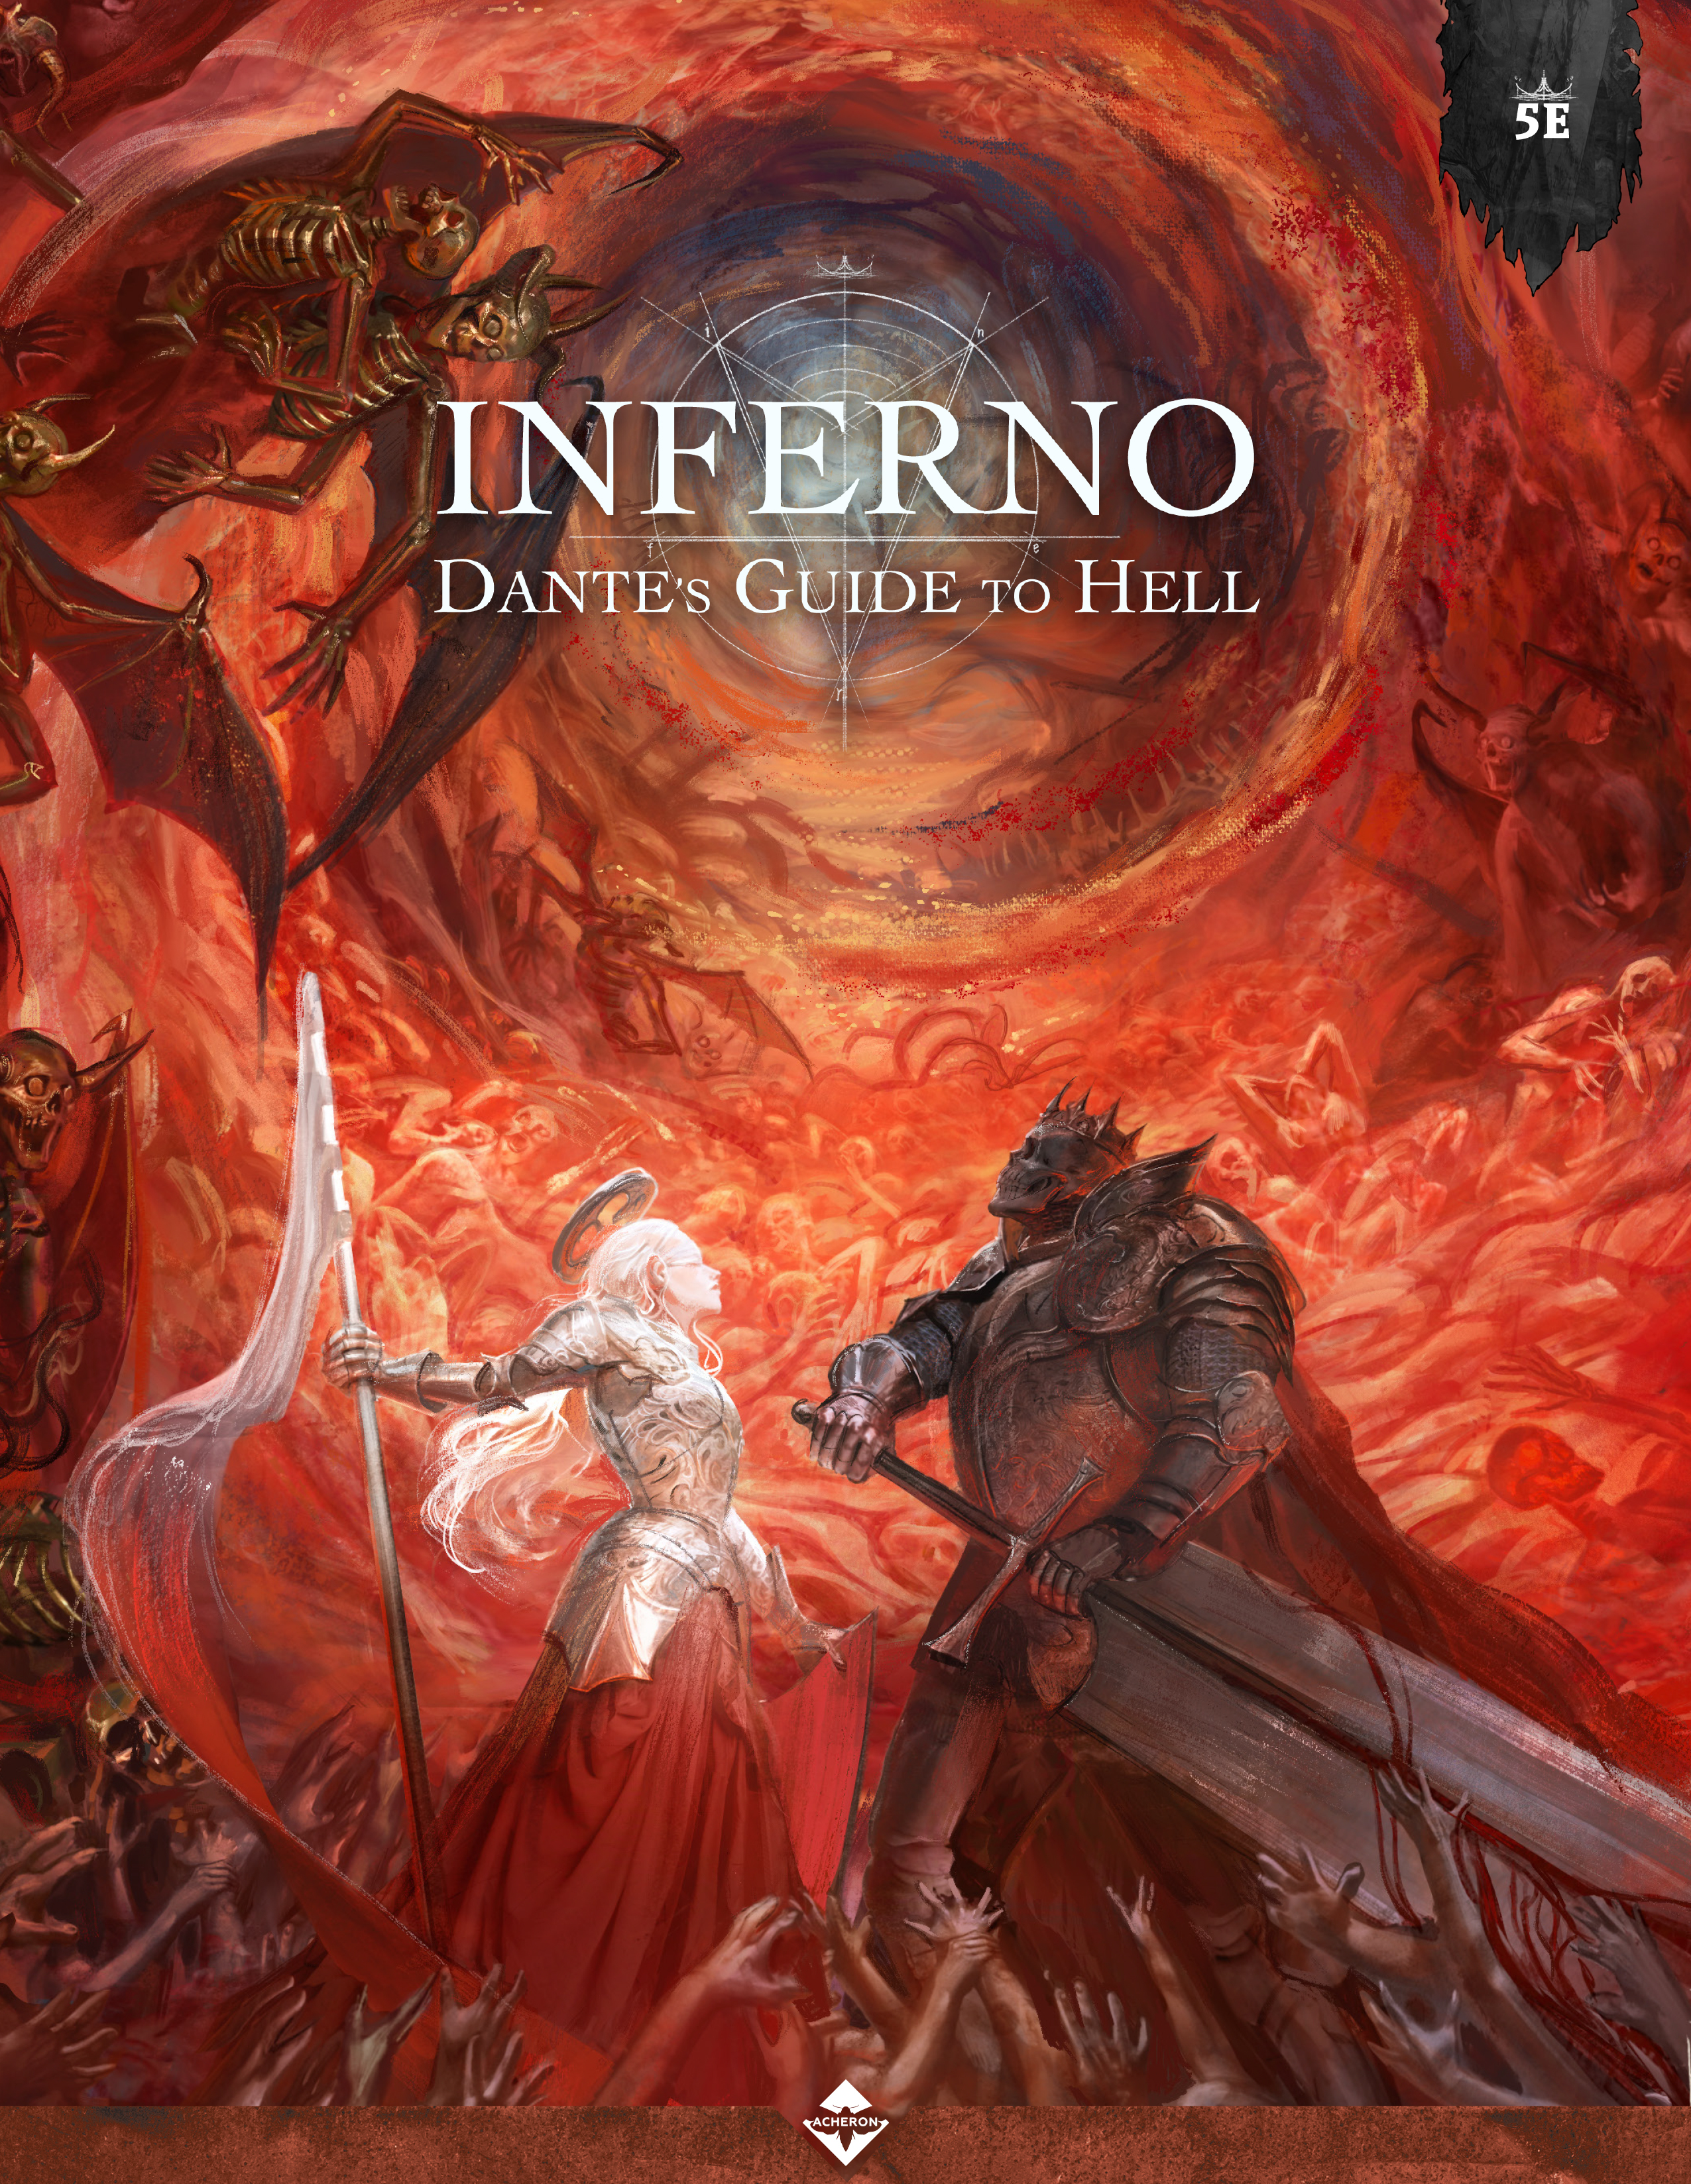 Inferno – Dante’s Guide to Hell Full pack 5e